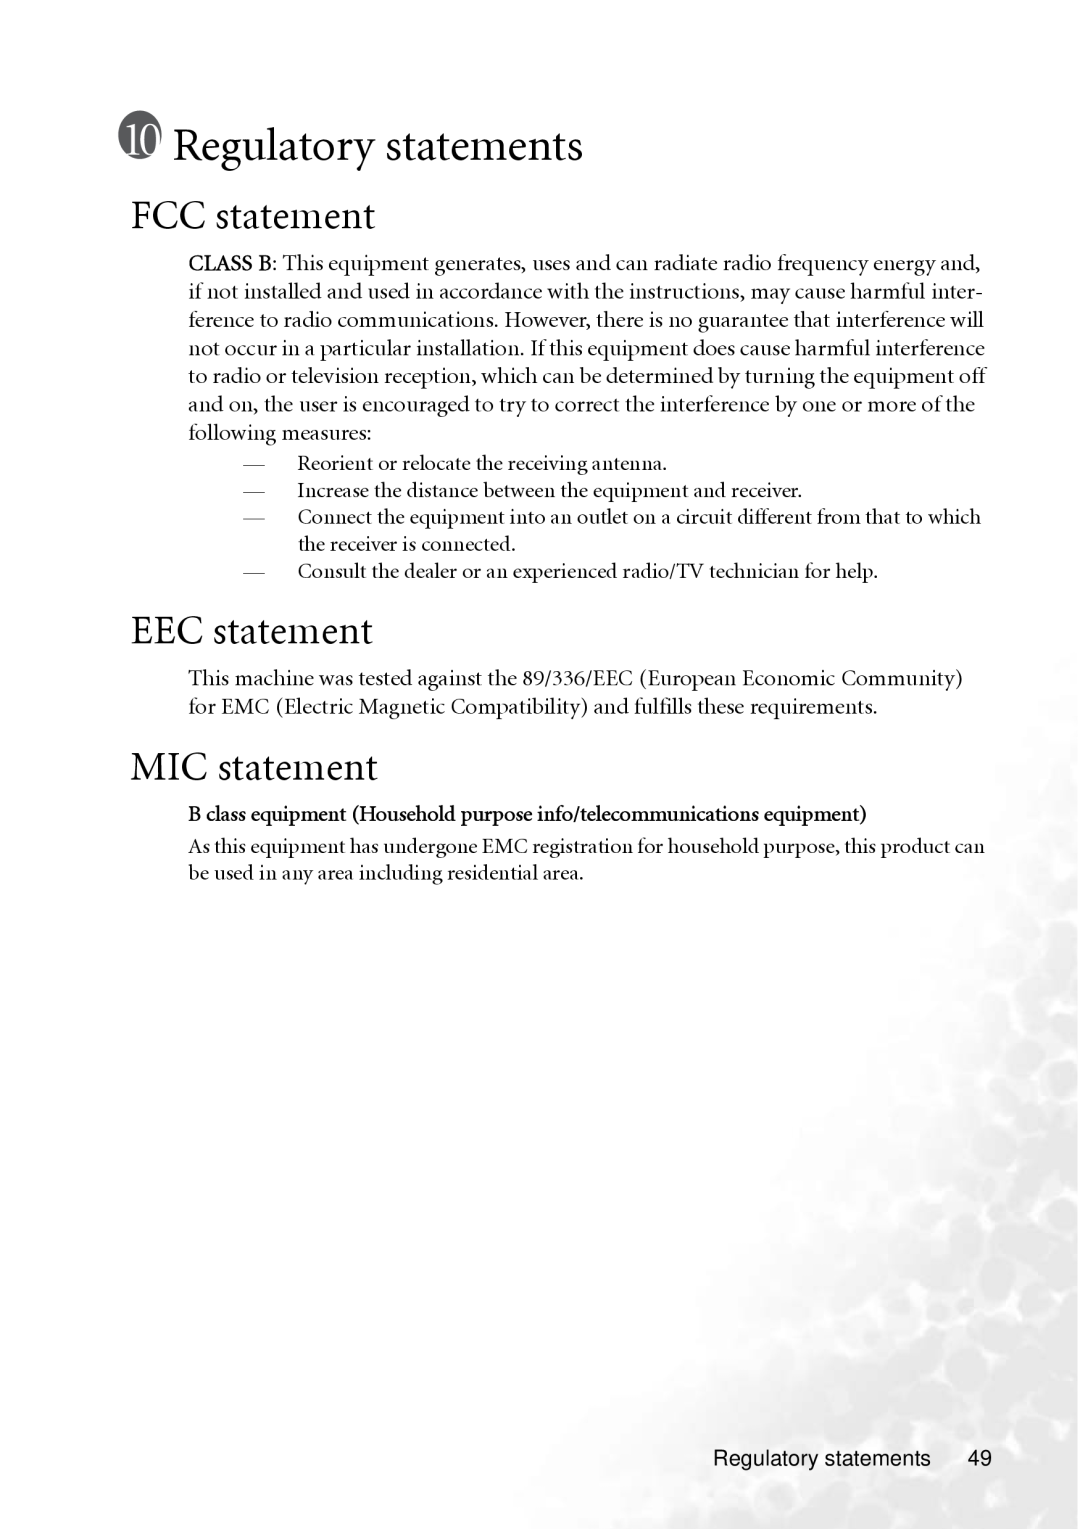 BenQ PB8260 user manual Regulatory statements, FCC statement, EEC statement, MIC statement 